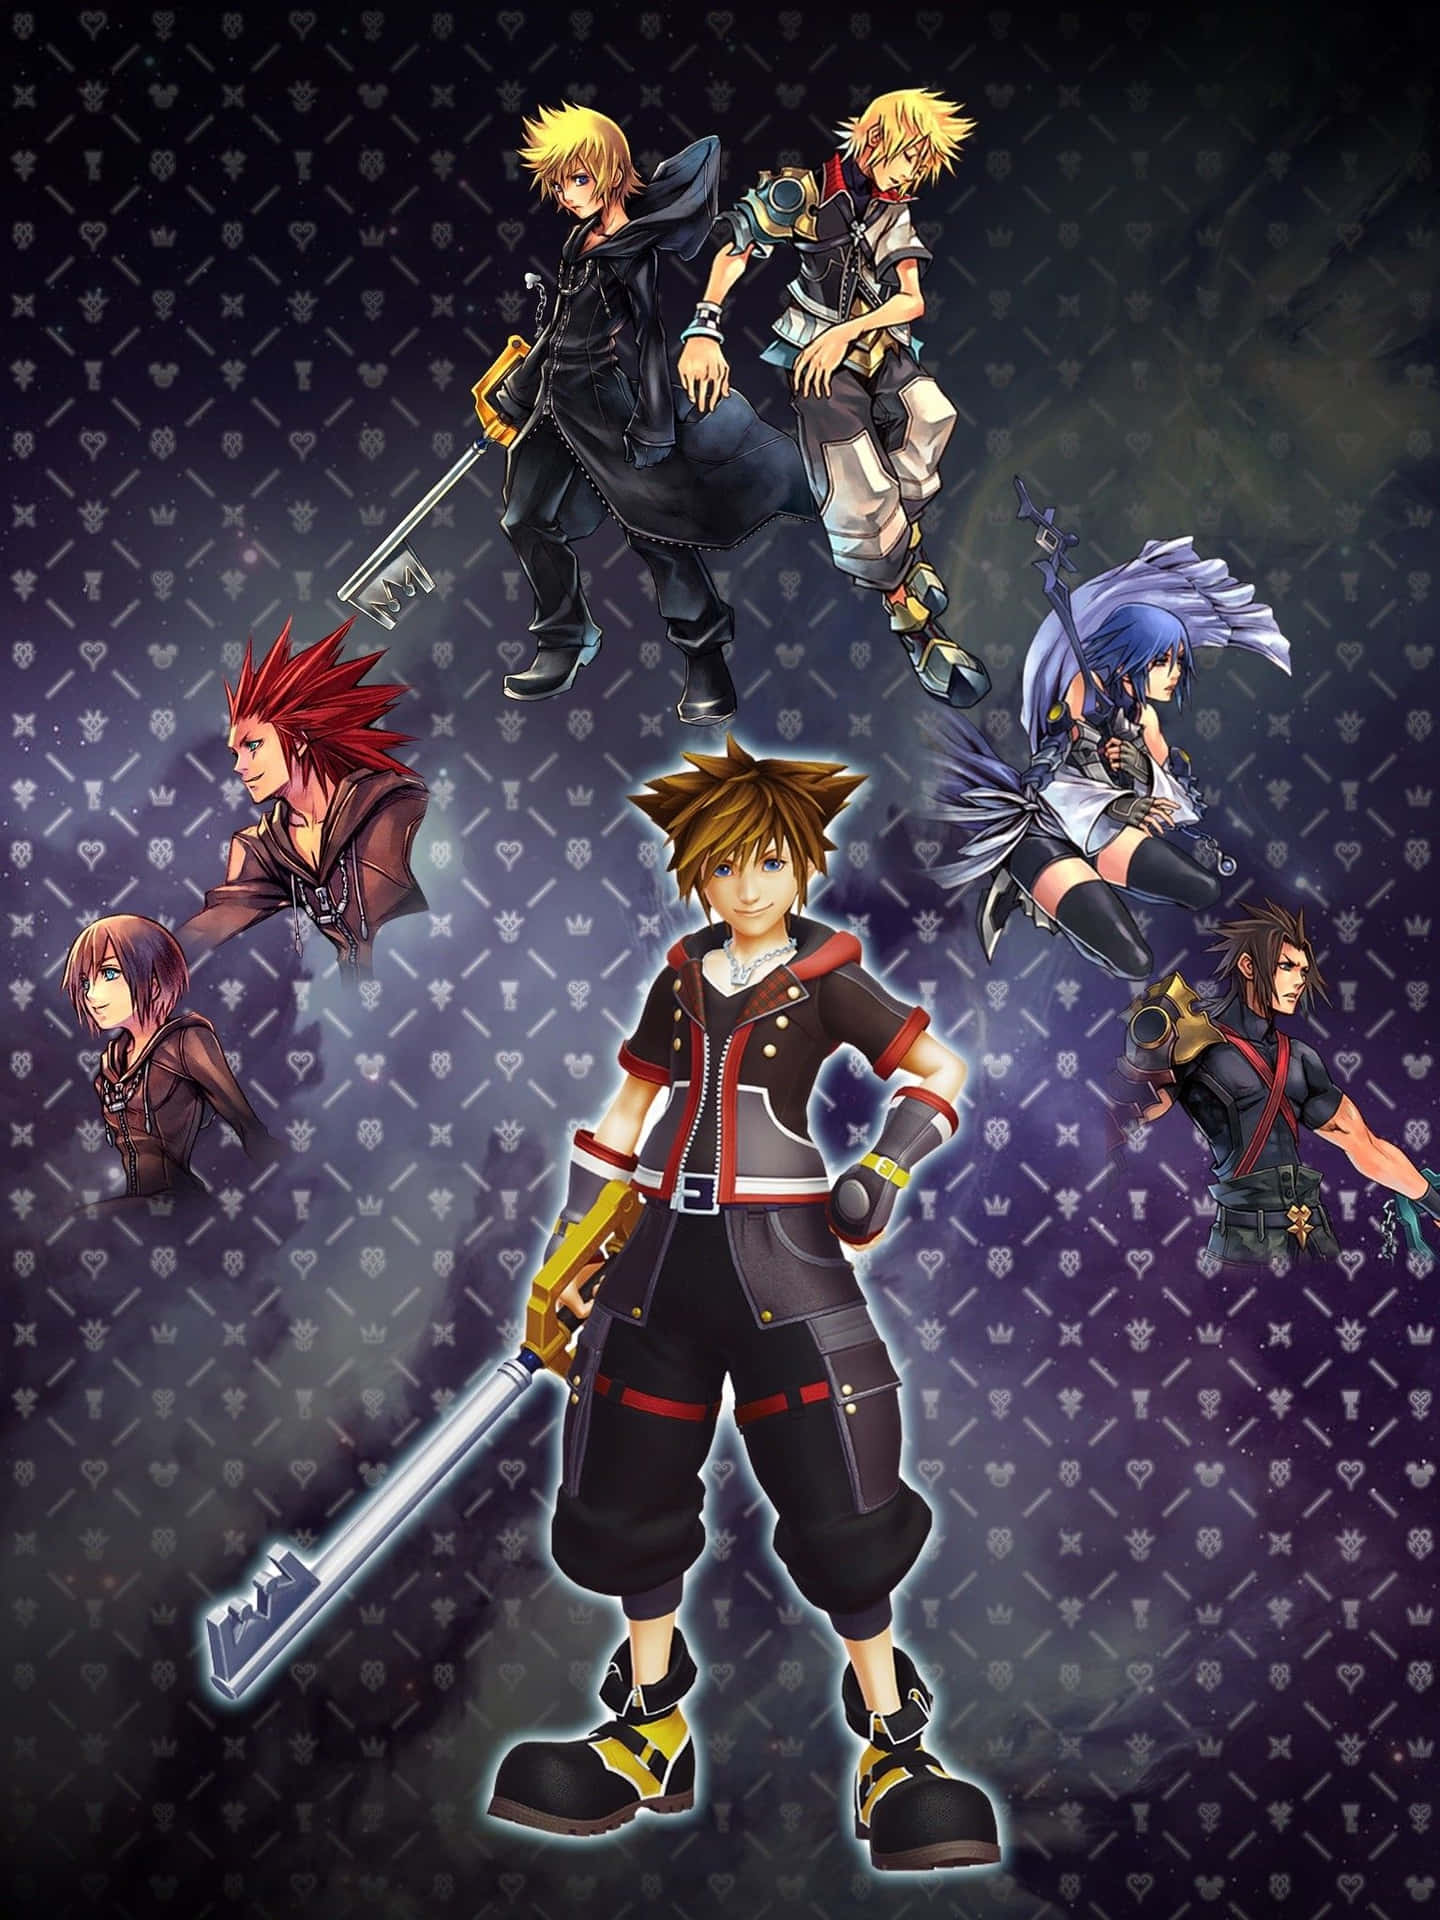 Kingdom Hearts Organization 13 Members in Action Wallpaper